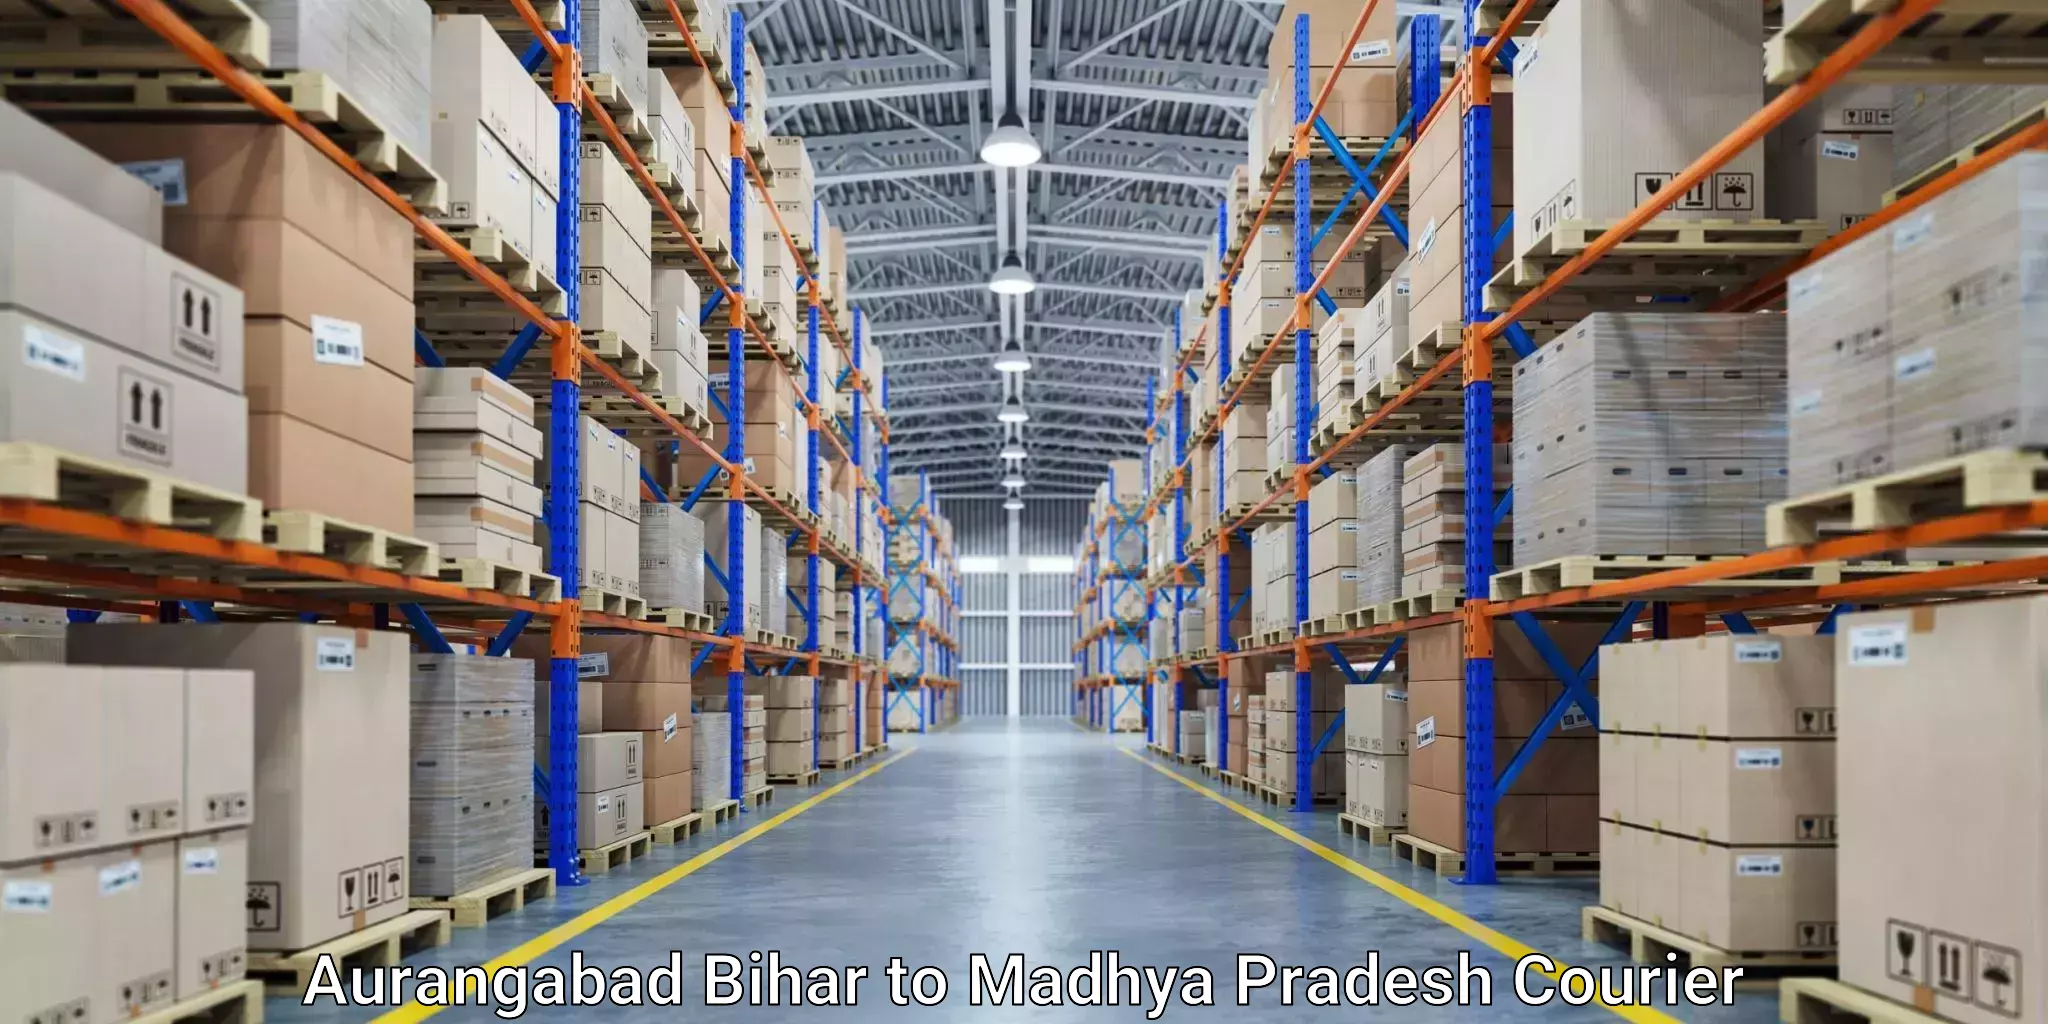 Reliable delivery network Aurangabad Bihar to Neemuch